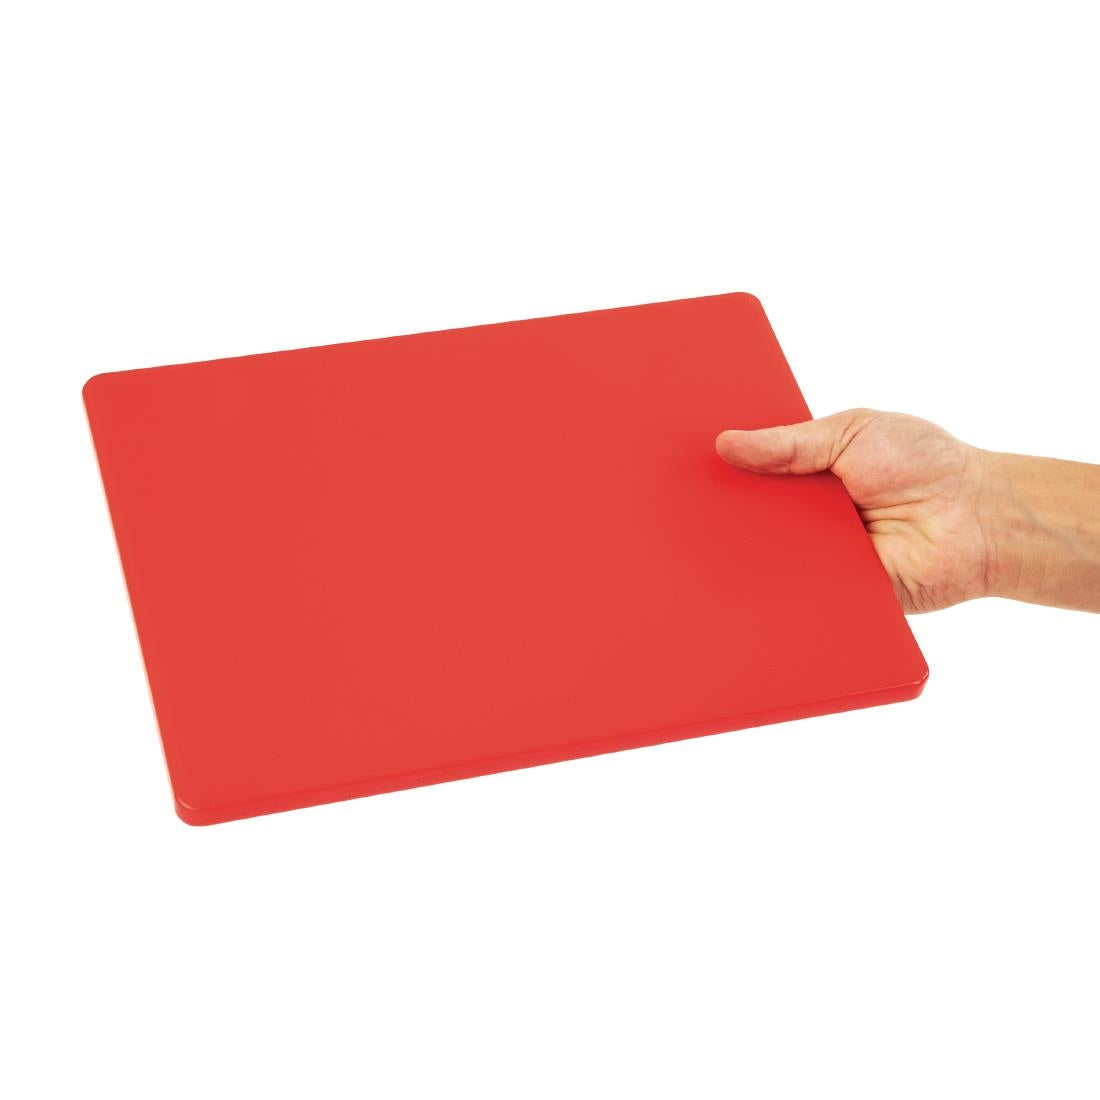 EDLP - Hygiplas Chopping Board Small Red - 229x305x12mm 12x9x1/2"